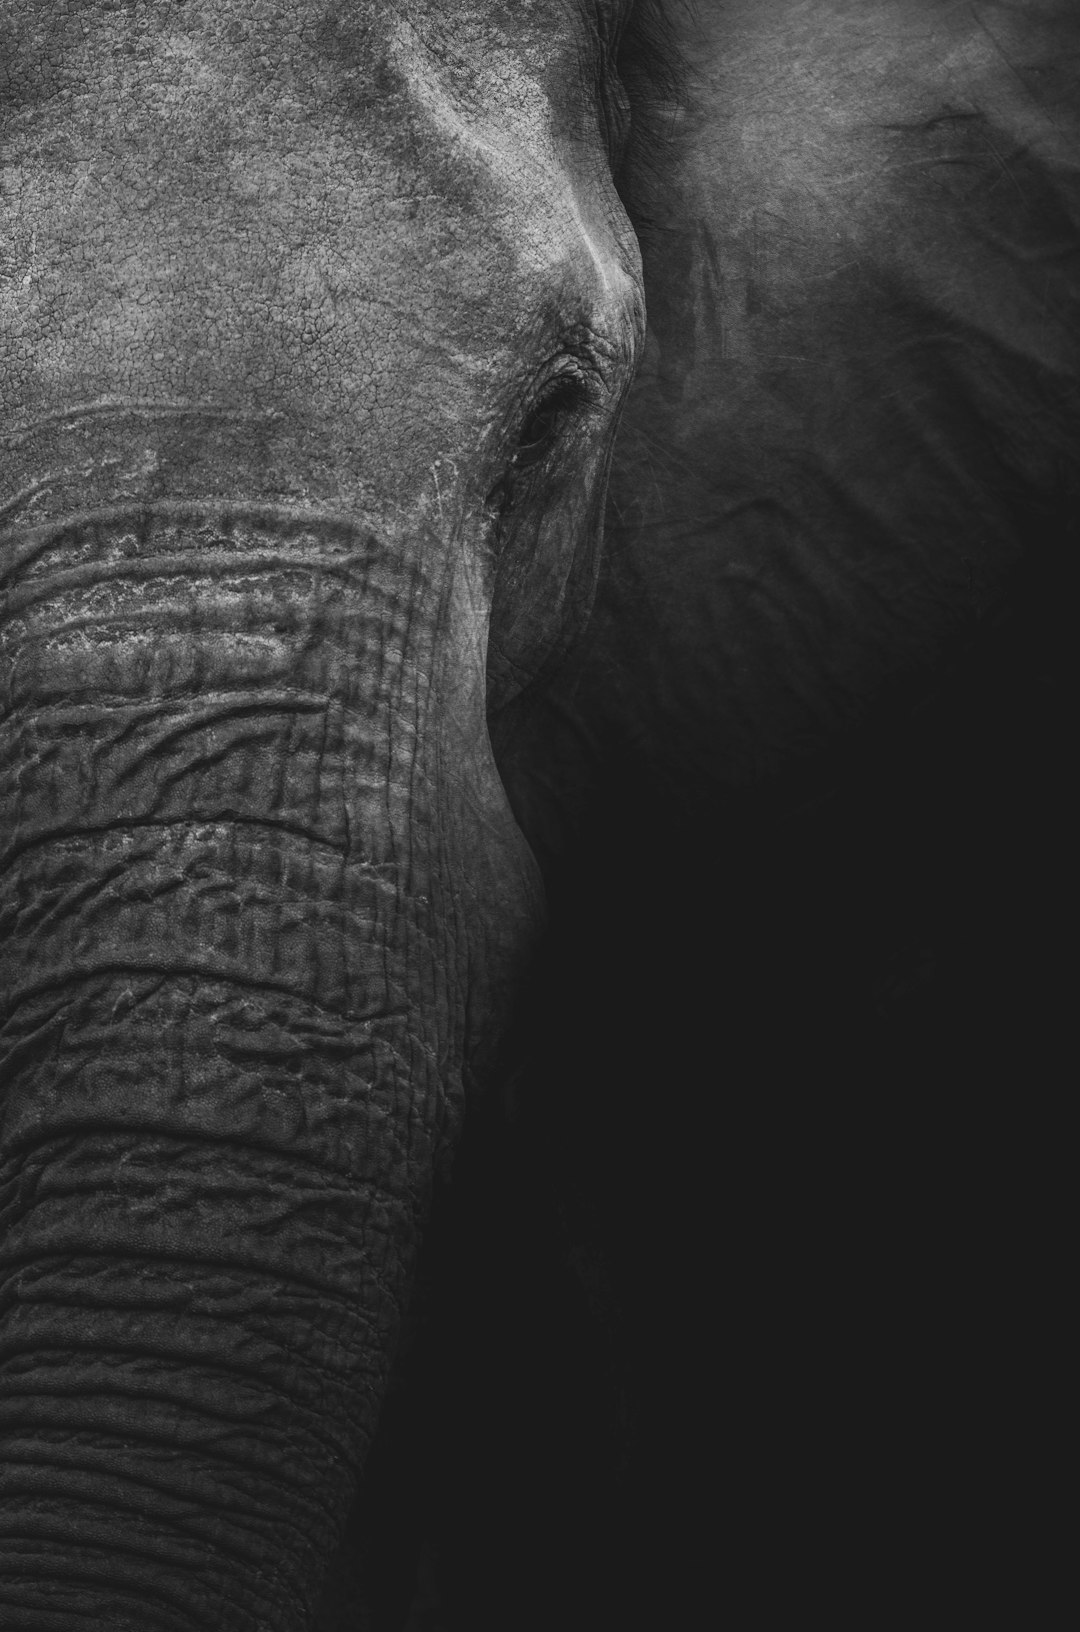  grayscale photography of elephant elephant